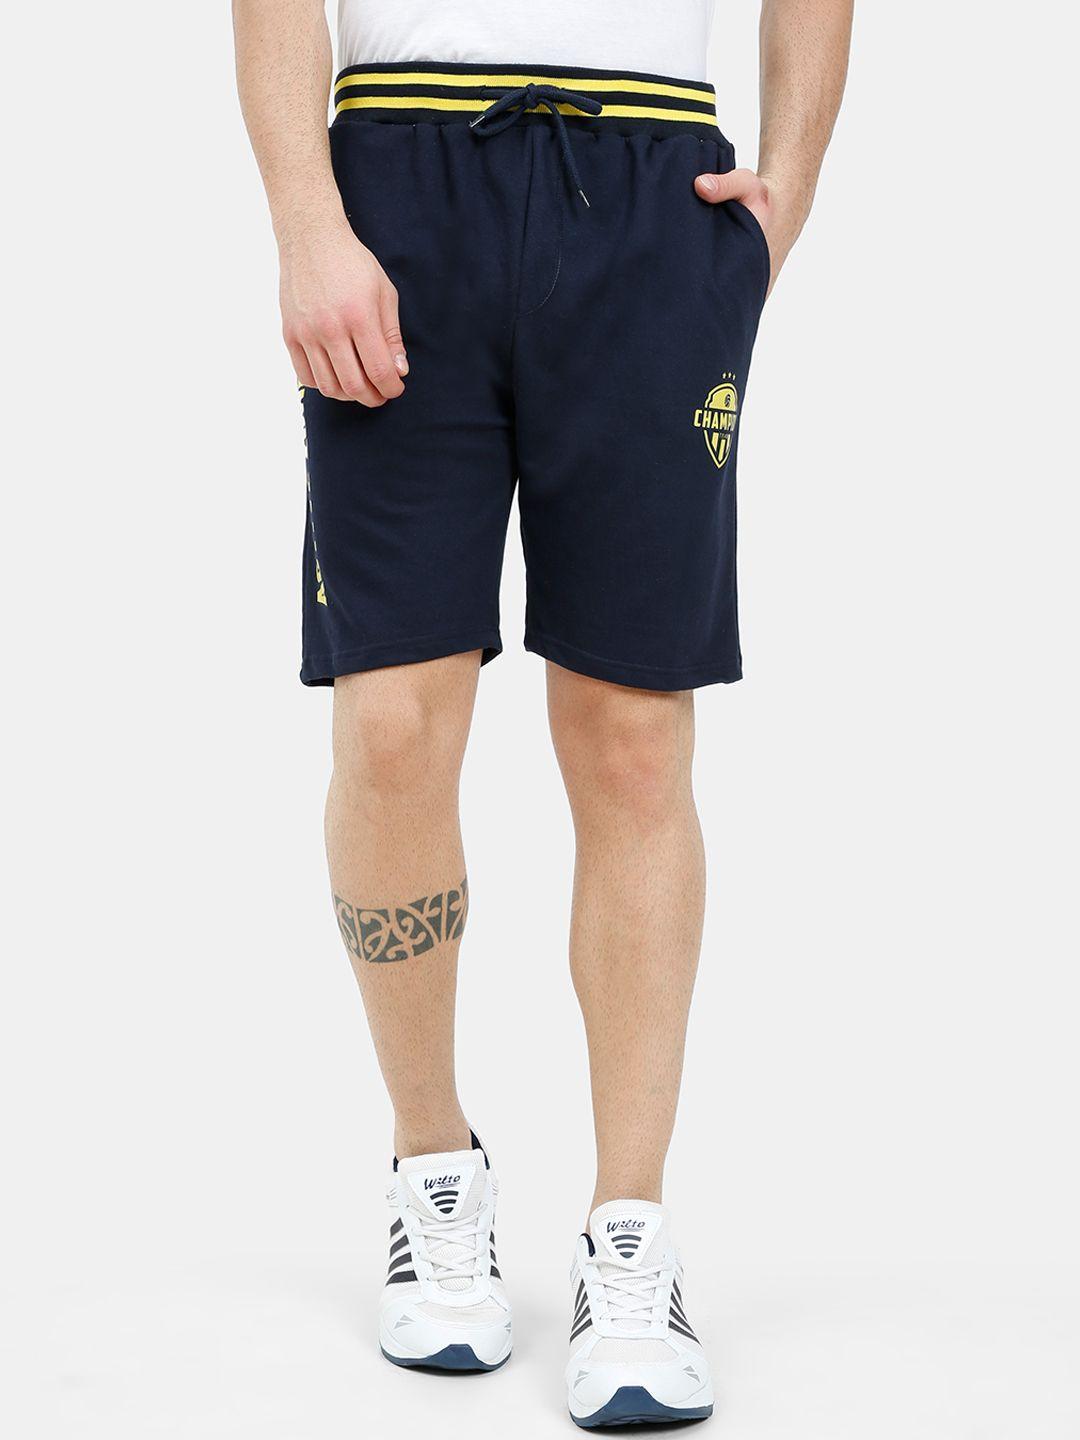 ardeur-men-navy-blue-cotton-training-or-gym-sports-shorts